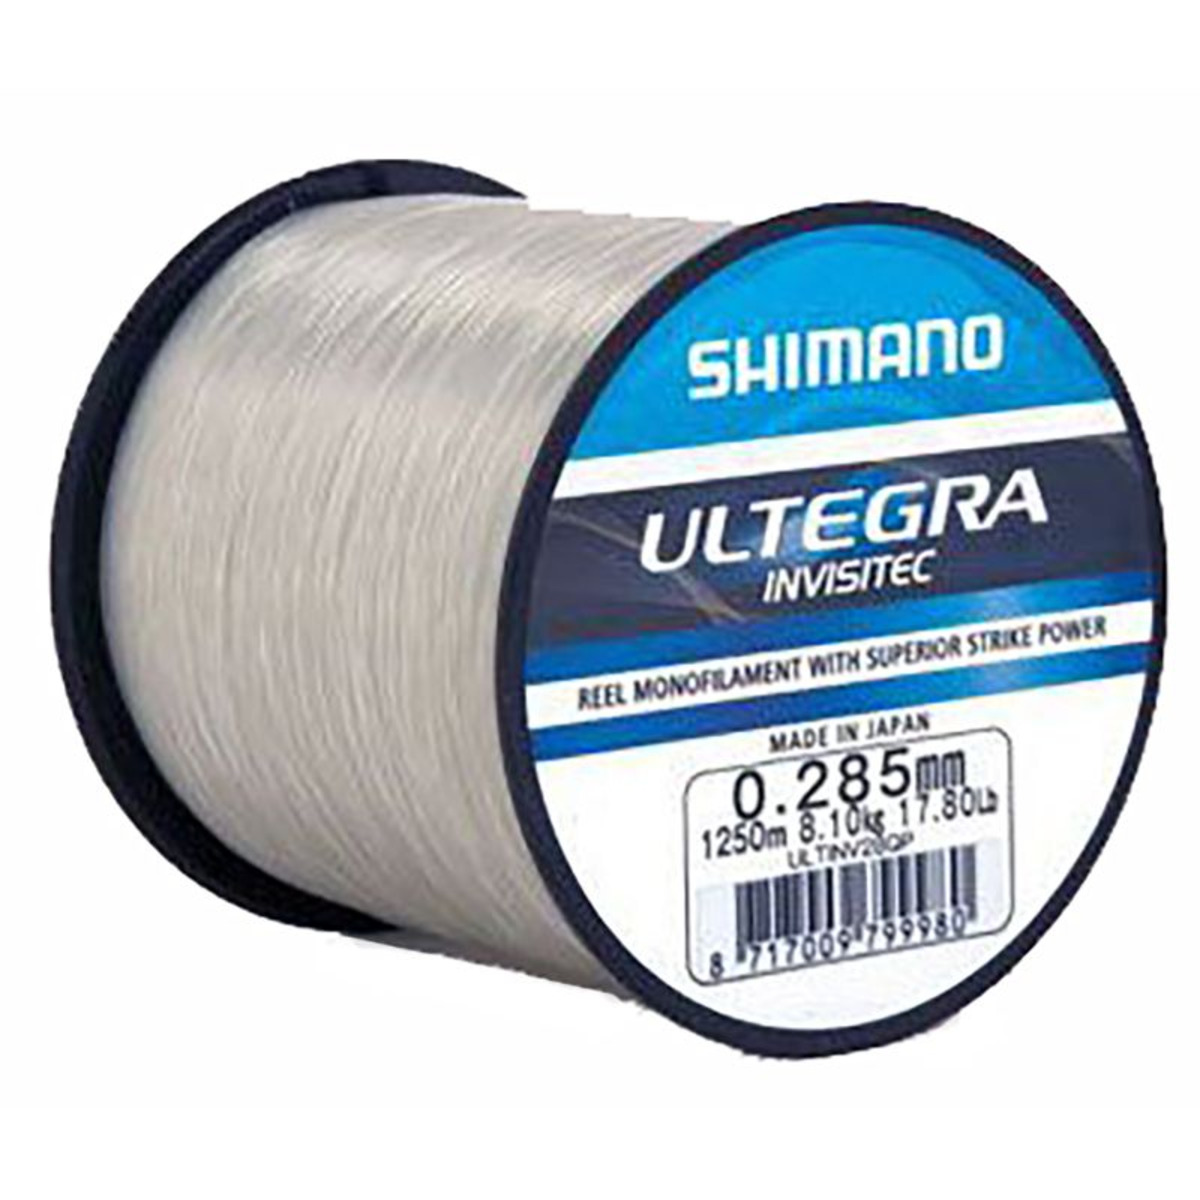 Shimano Ultegra Invisitec - 0.18 mm - 150 m